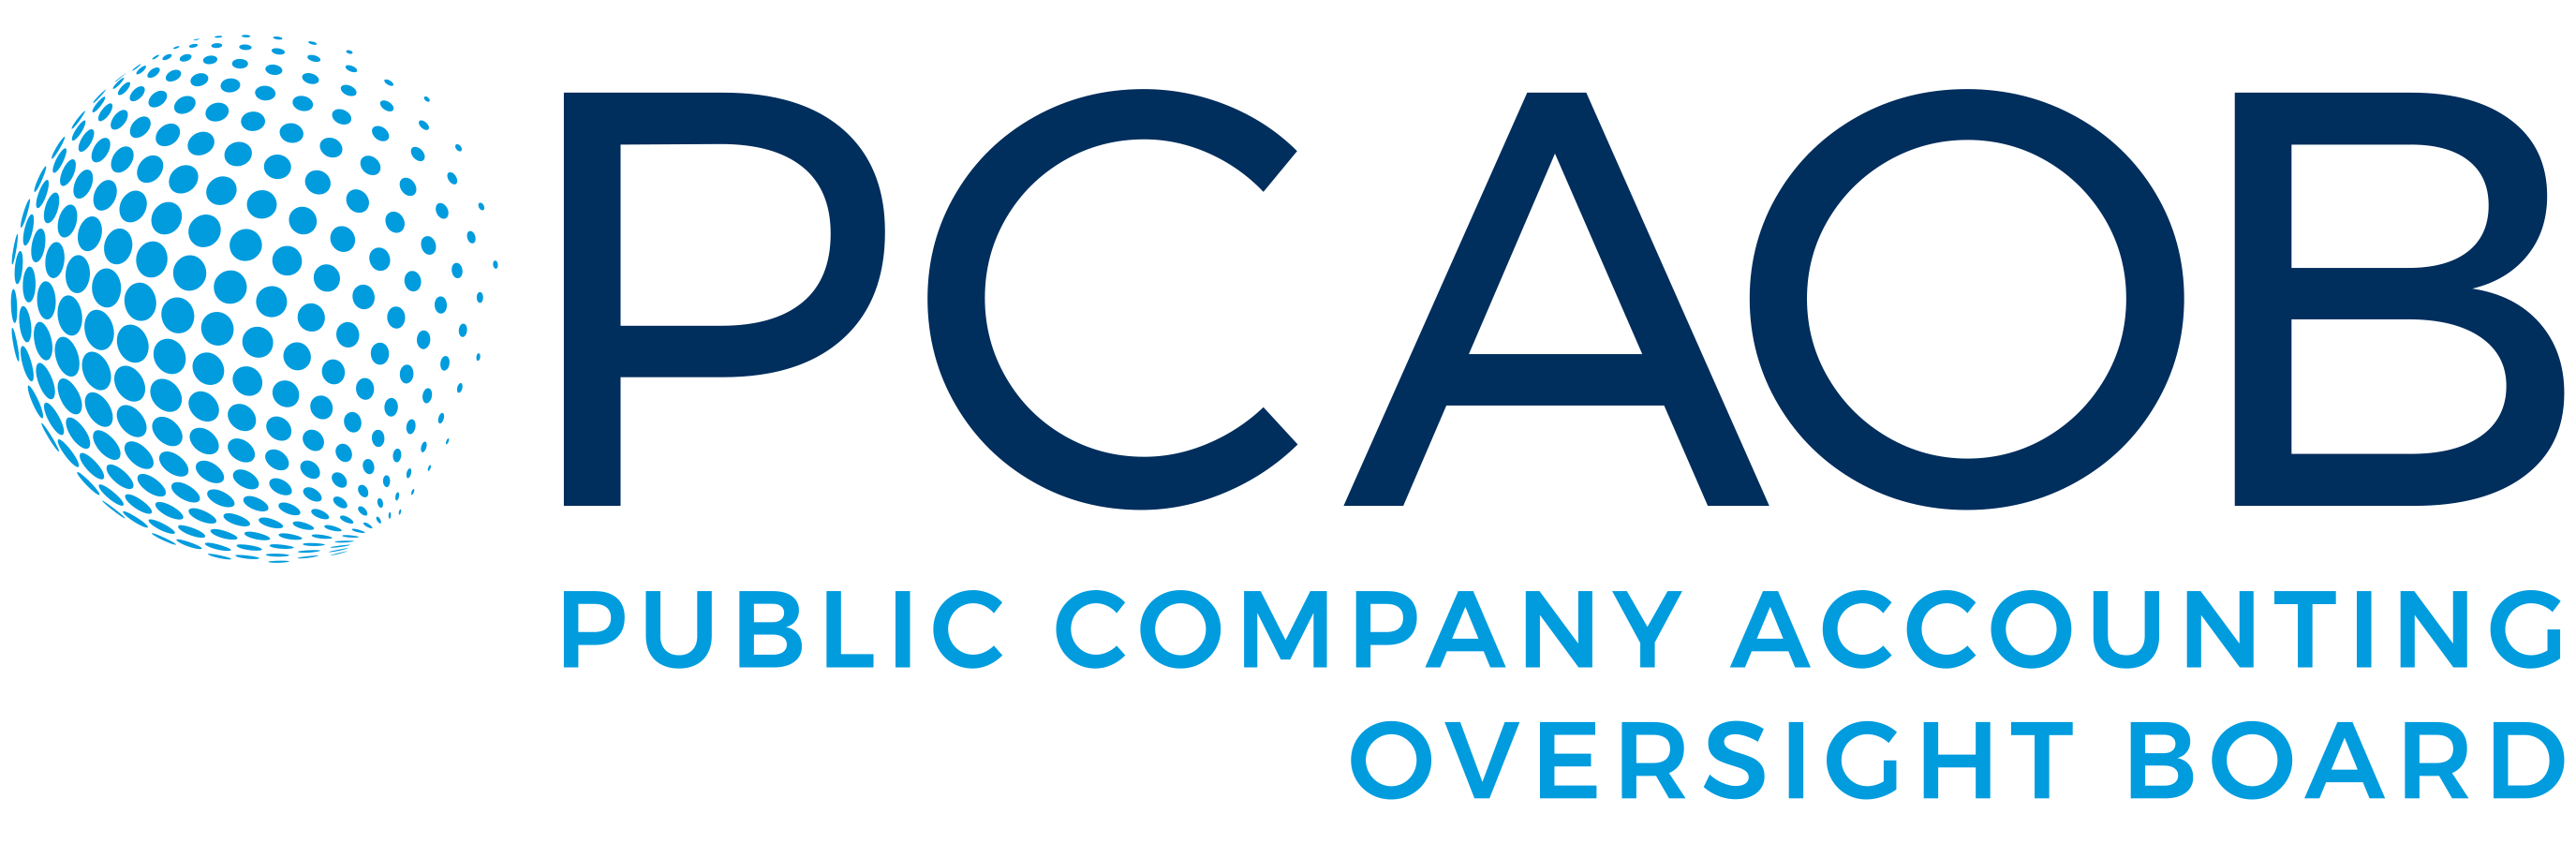 2020-pcaob-logo-2750x900 (1)